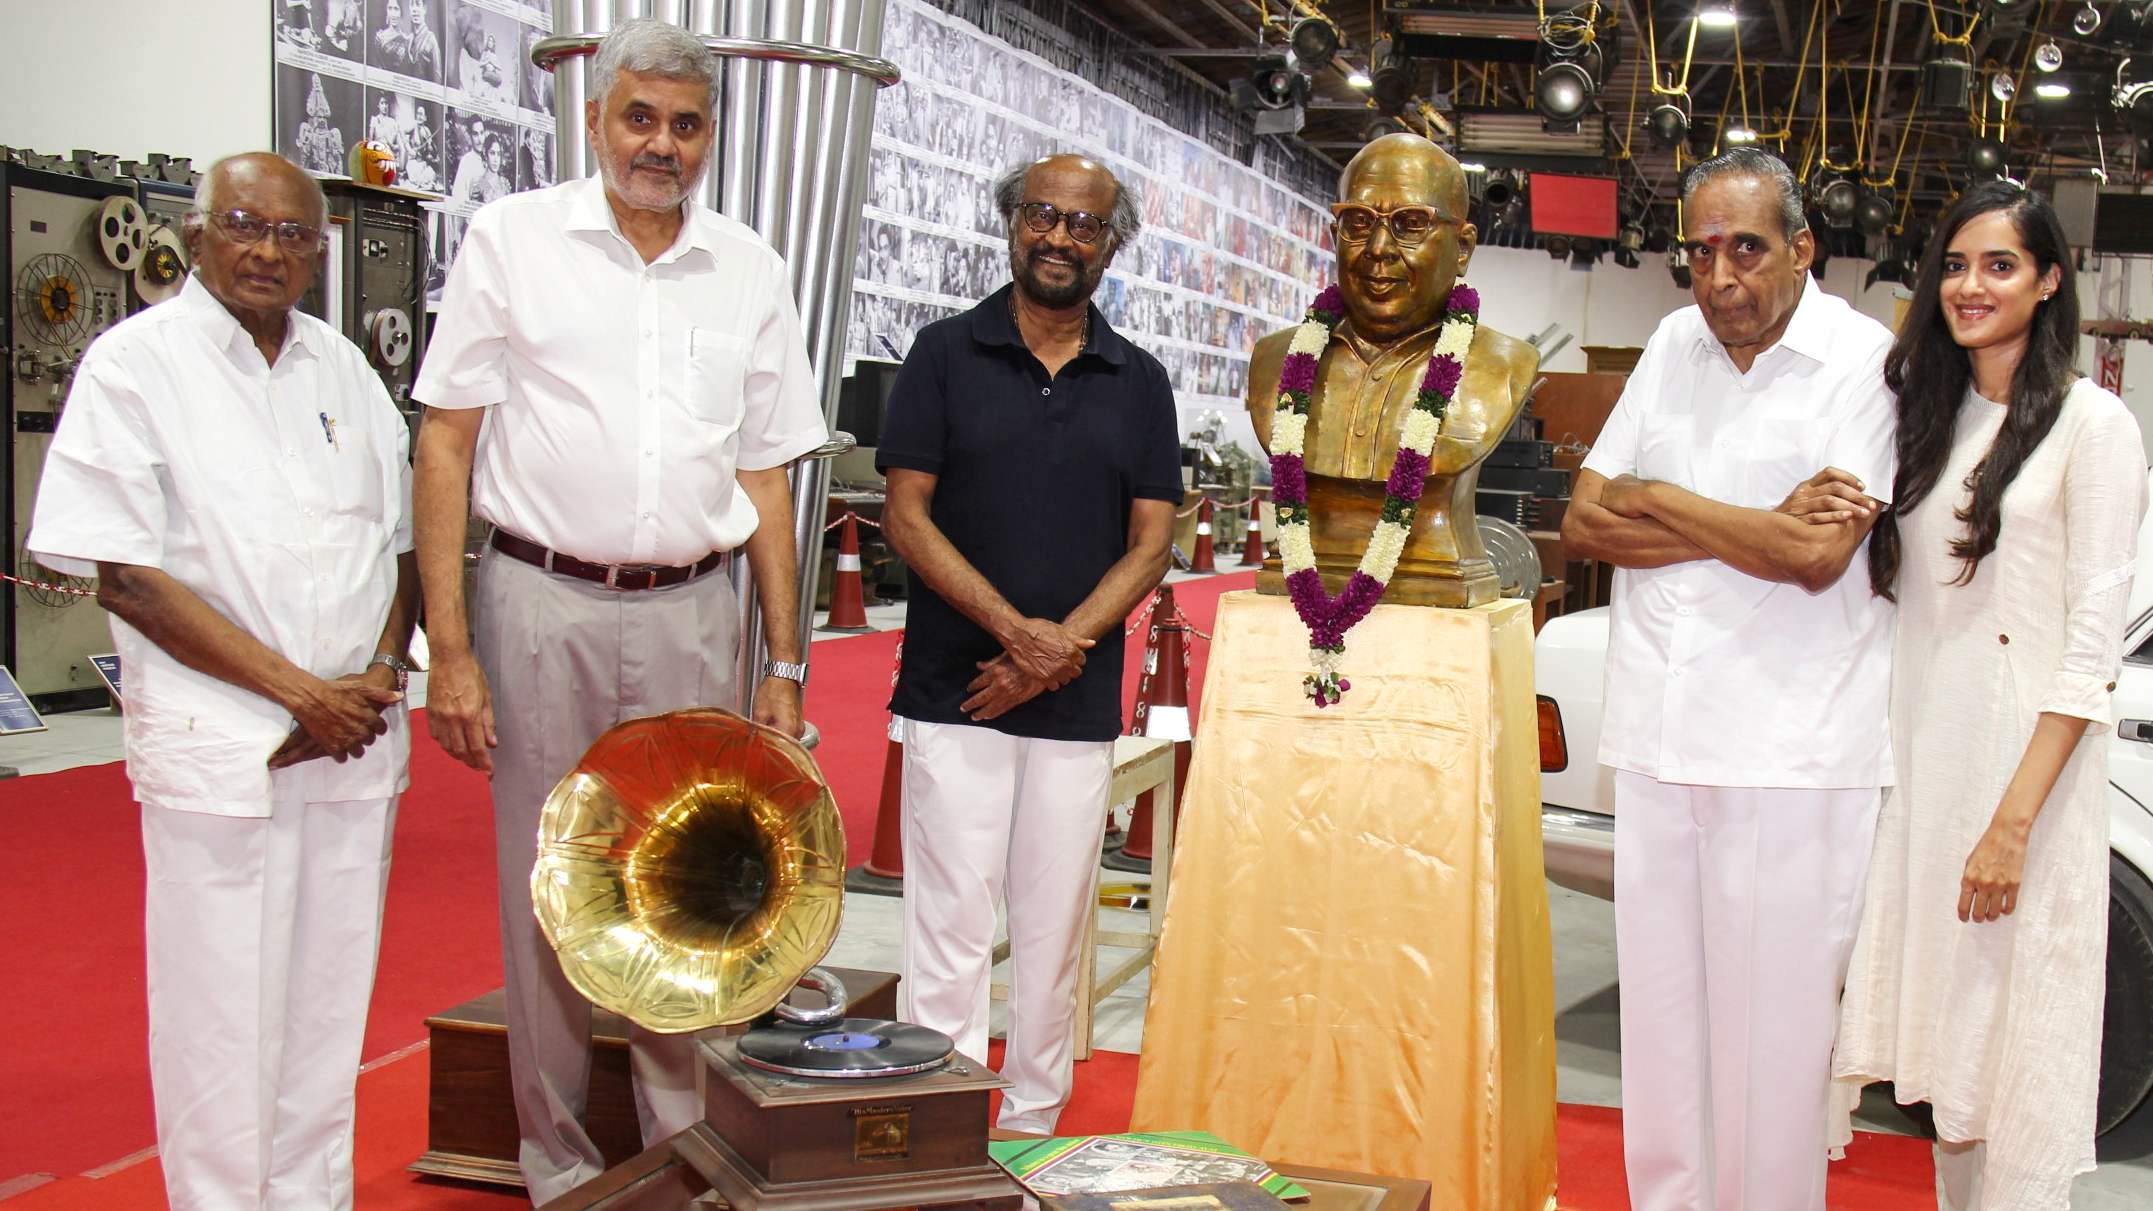 Superstar Rajinikanth visited the AVM Heritage Museum